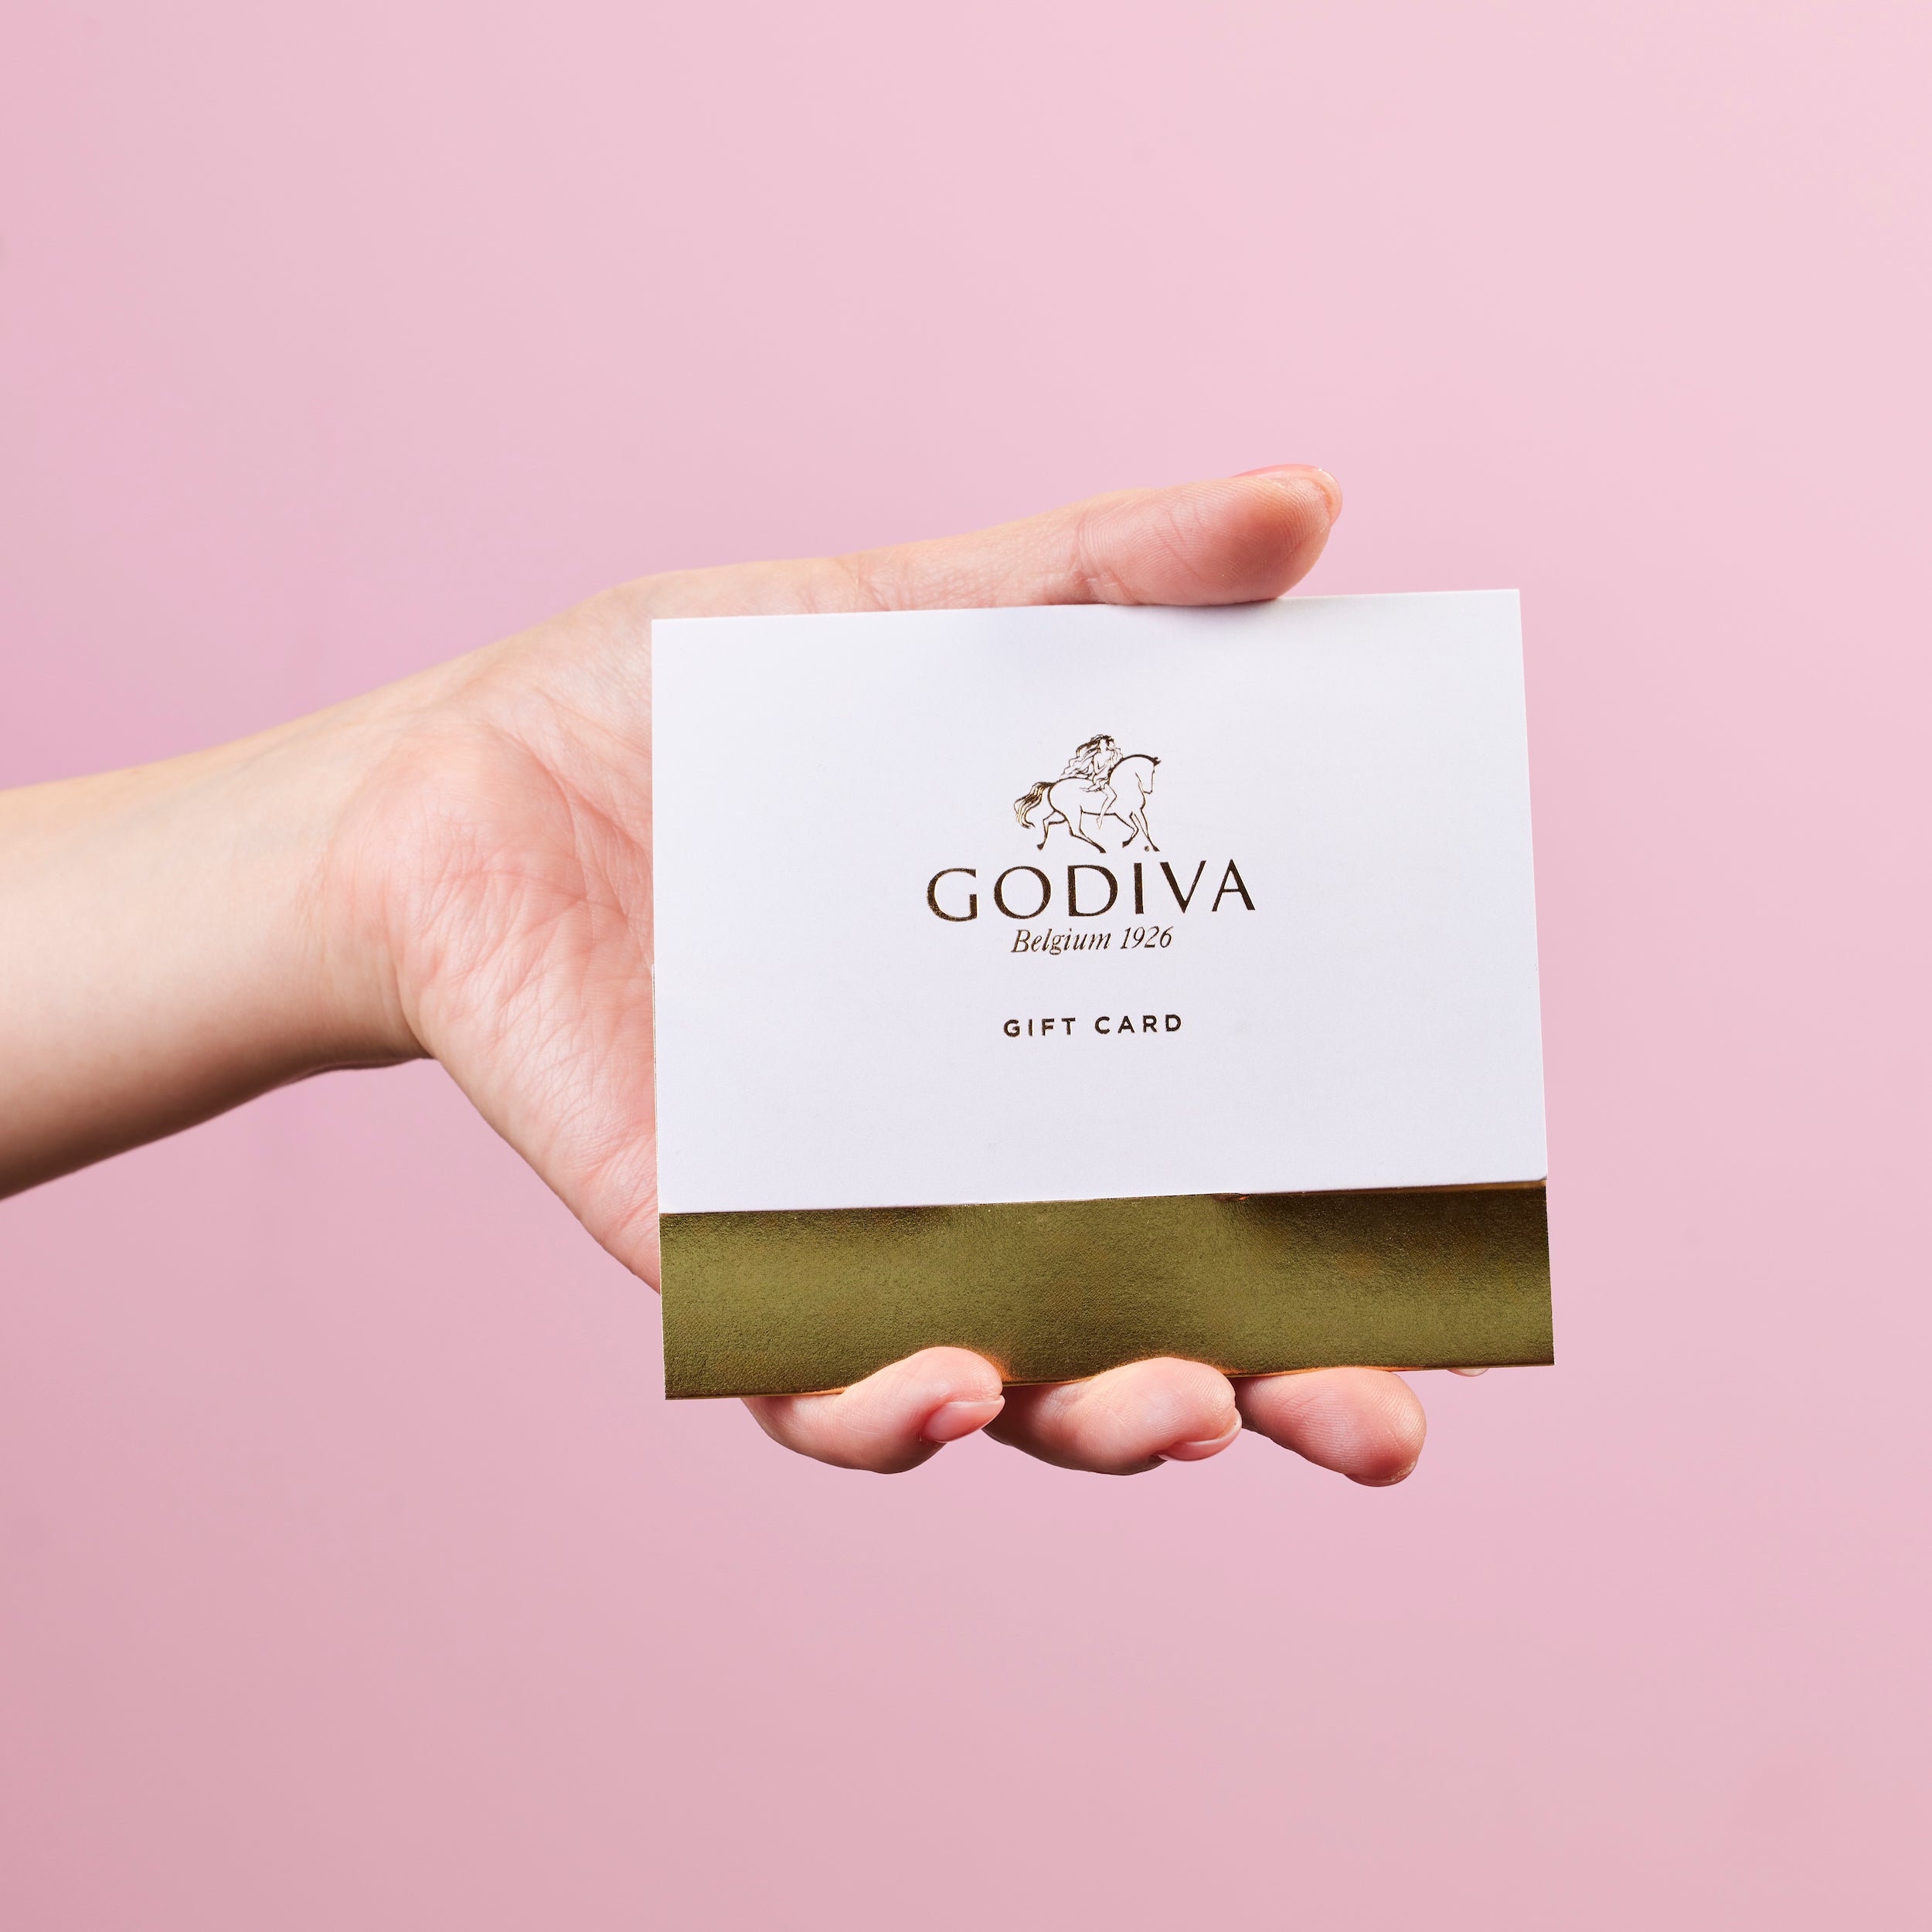 godiva-gift-card-header_462e85a0-1655-4b71-8b41-e87e31fbf901.jpg